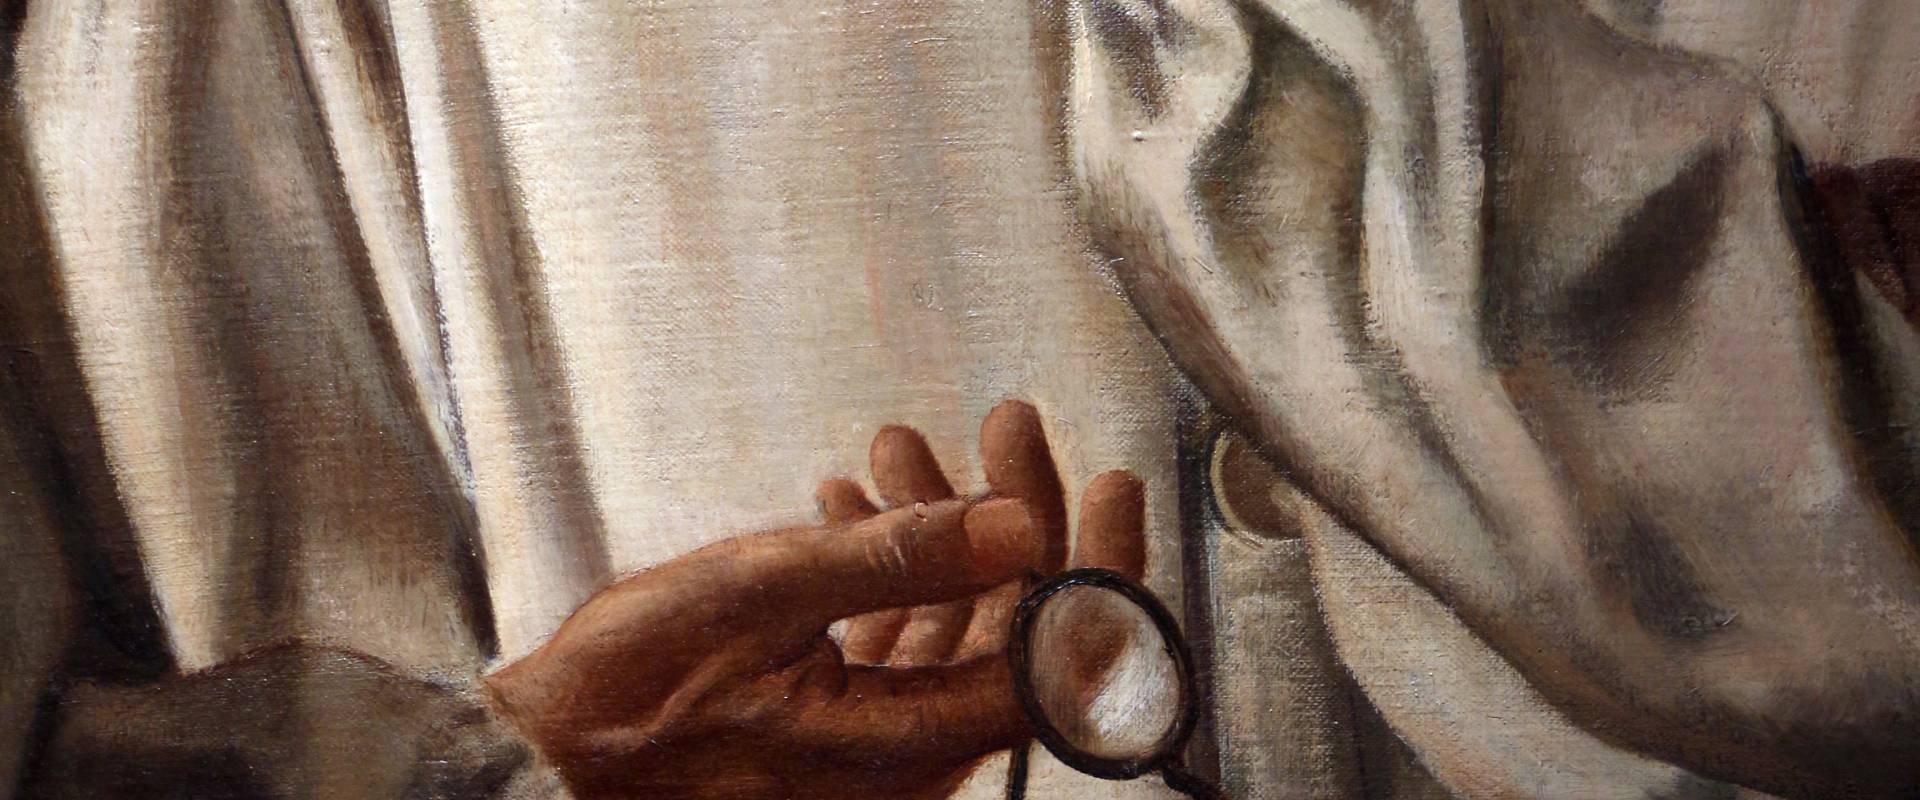 Ubaldo oppi, i chirurghi, 1926 (vicenza, pal. chiericati) 04 mani, occhiali 1 foto di Sailko